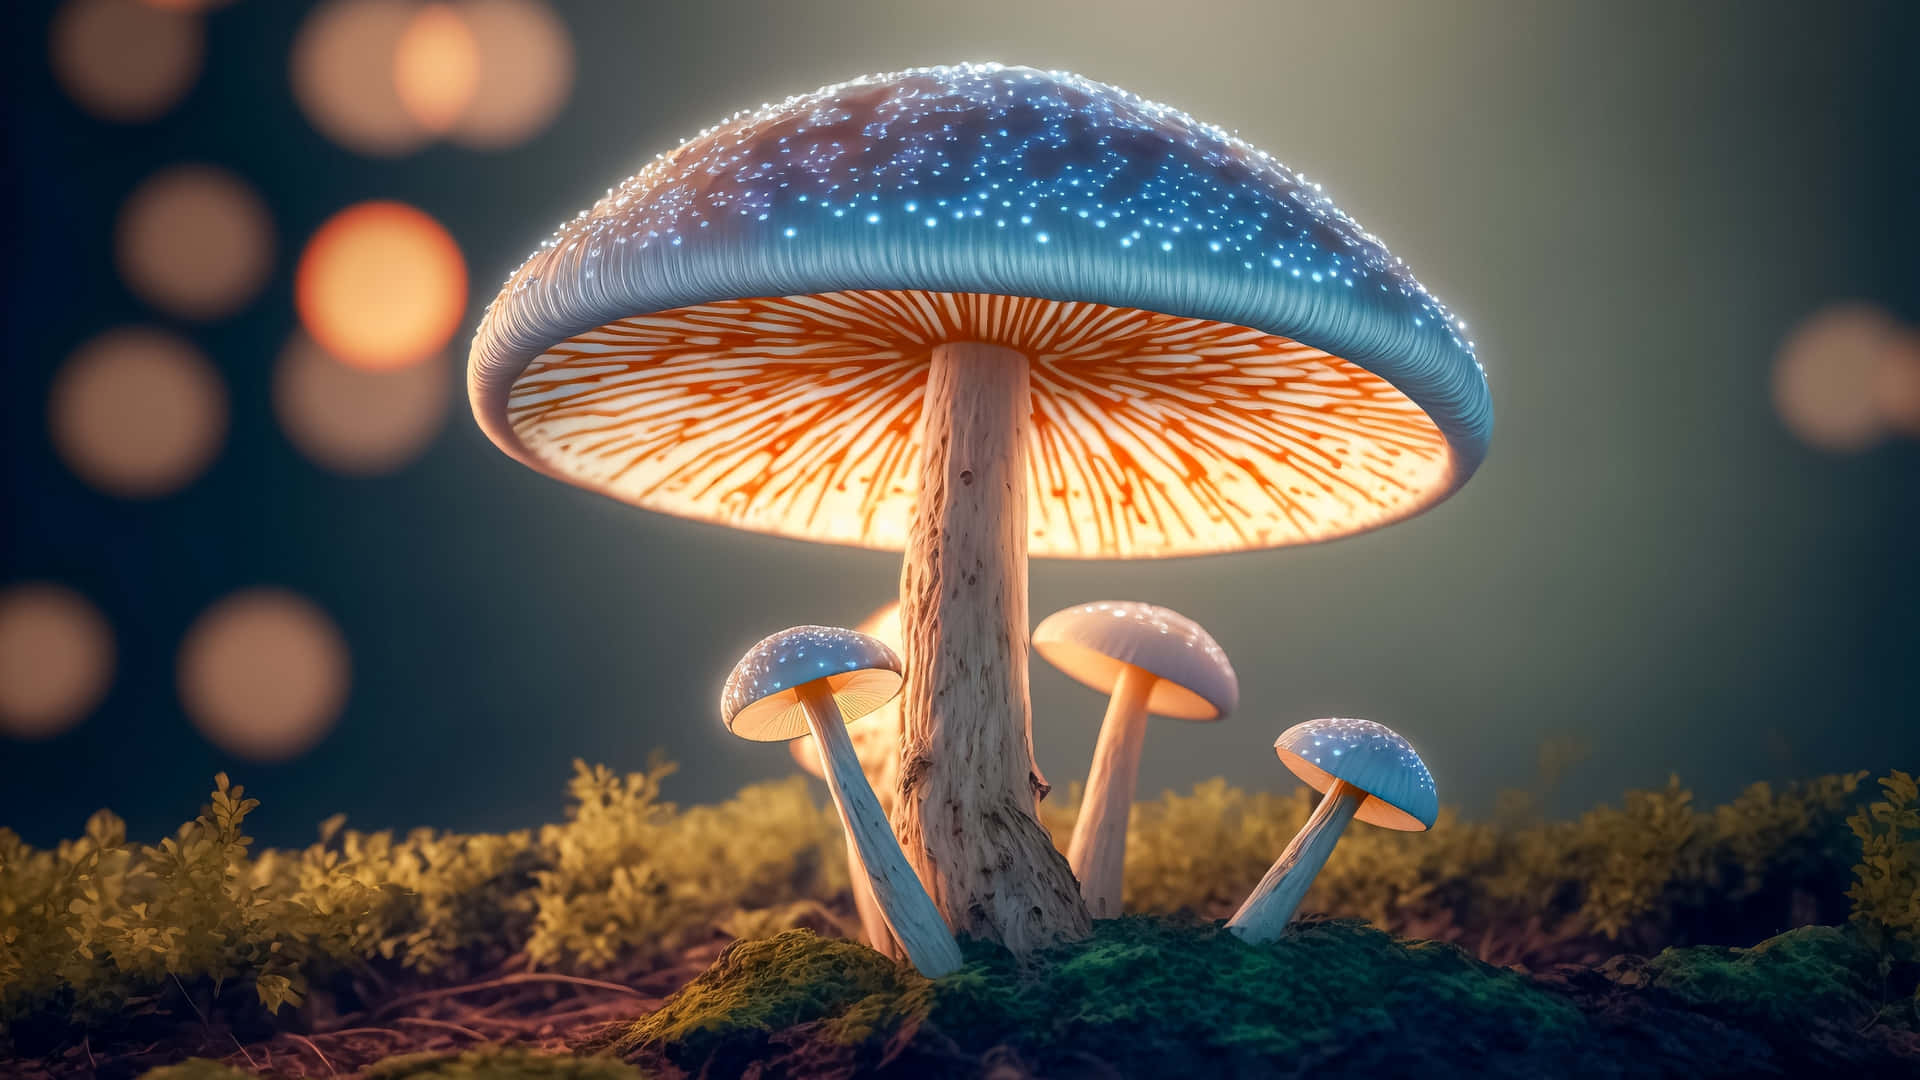 Enchanted Glowing Mushrooms Art Wallpaper